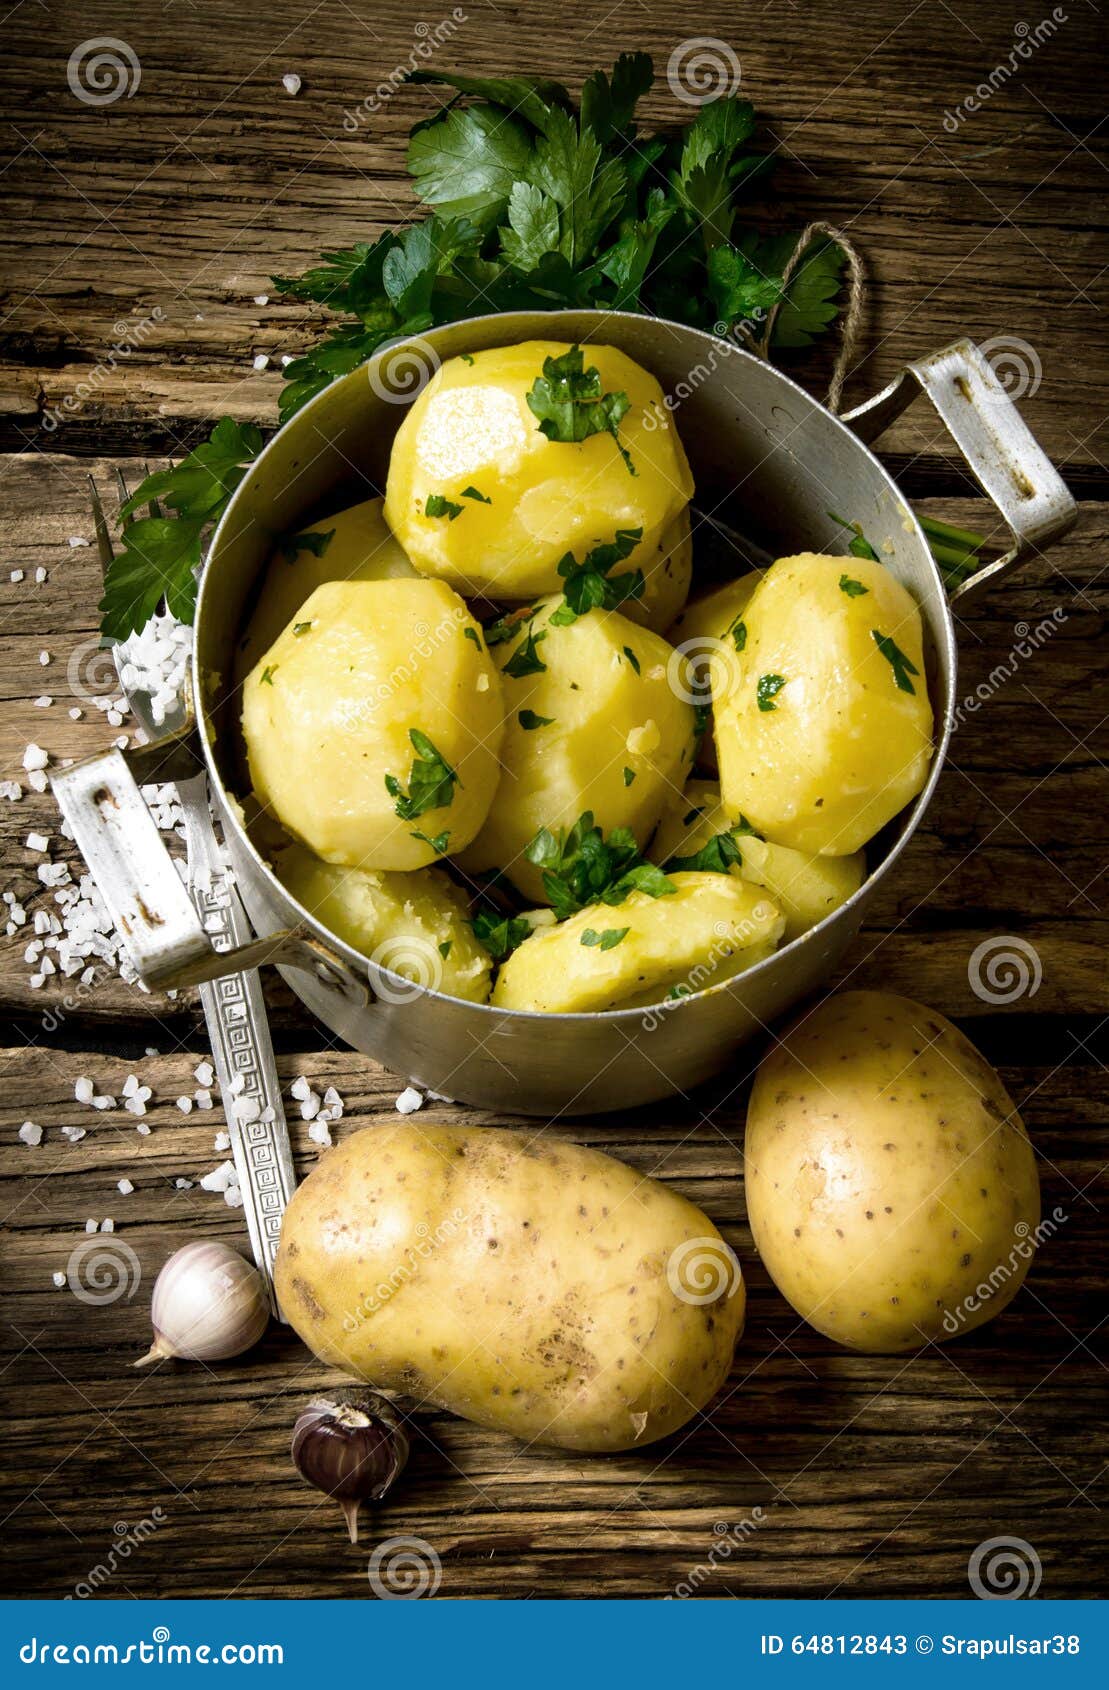 Steam potatoes or boil фото 105